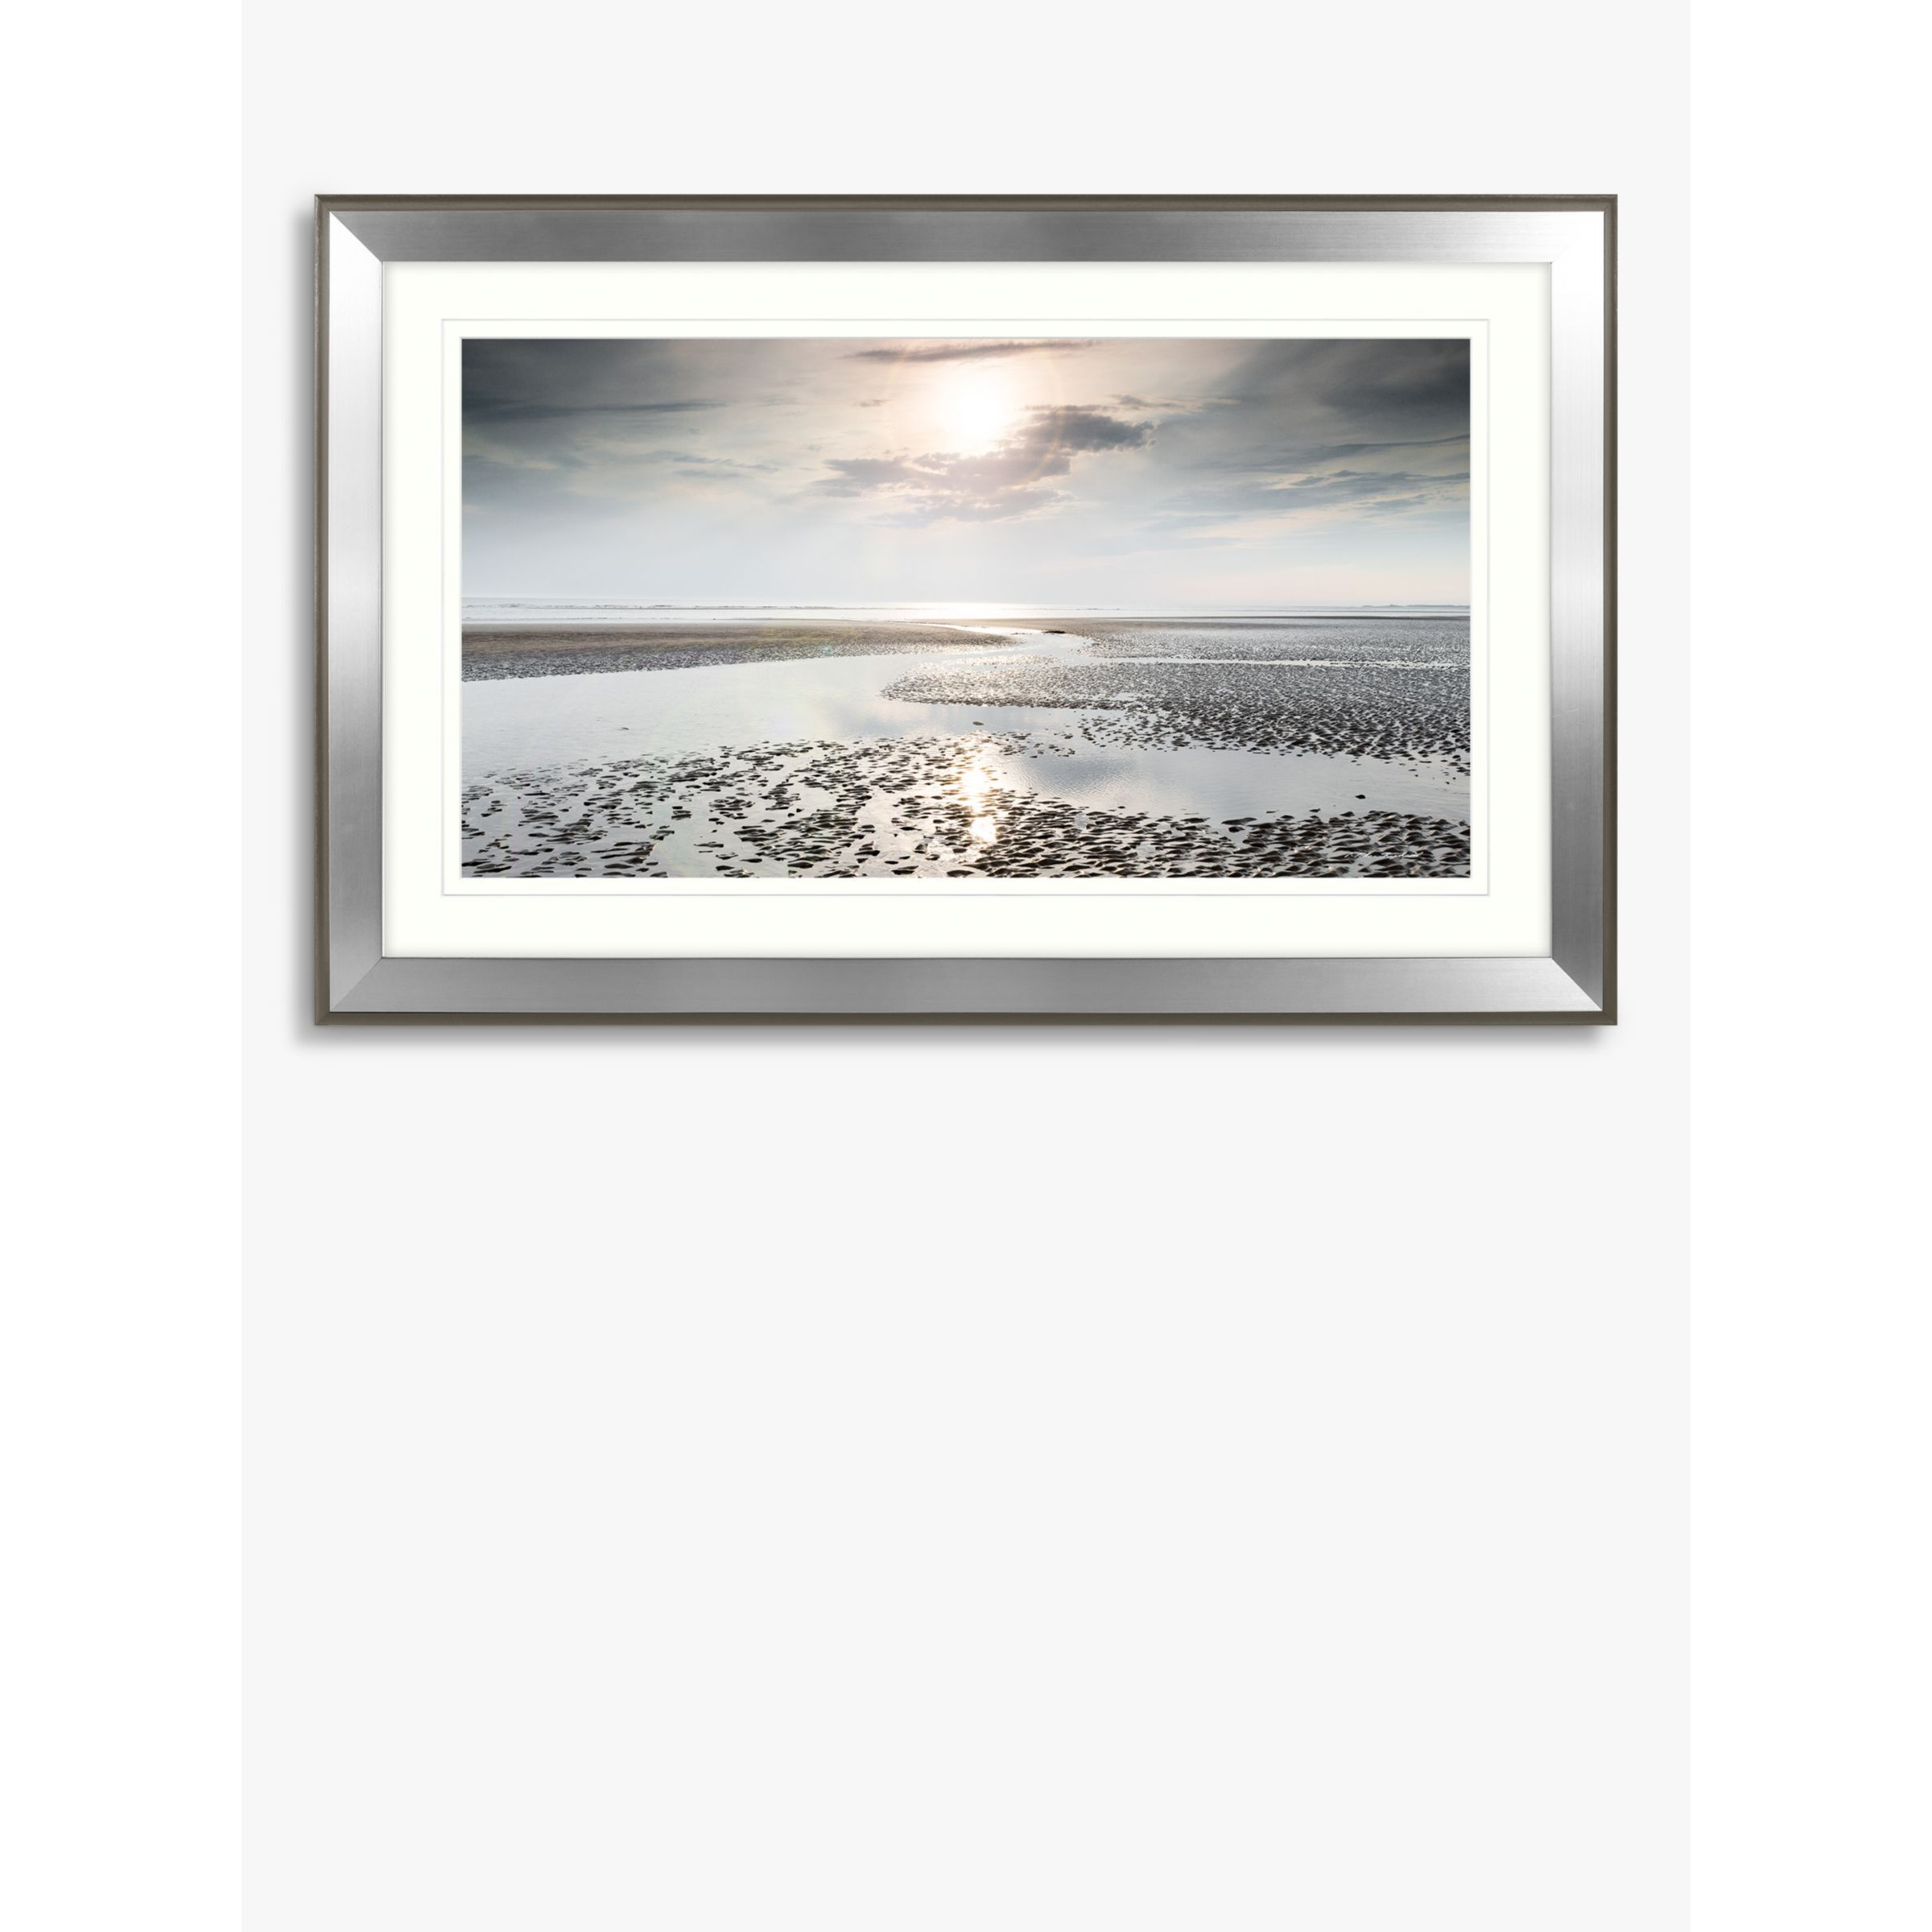 John Lewis Mike Shepherd 'Reflections of Heaven' Embellished Framed Print & Mount, 71 x 110cm, Silver/Multi - image 1